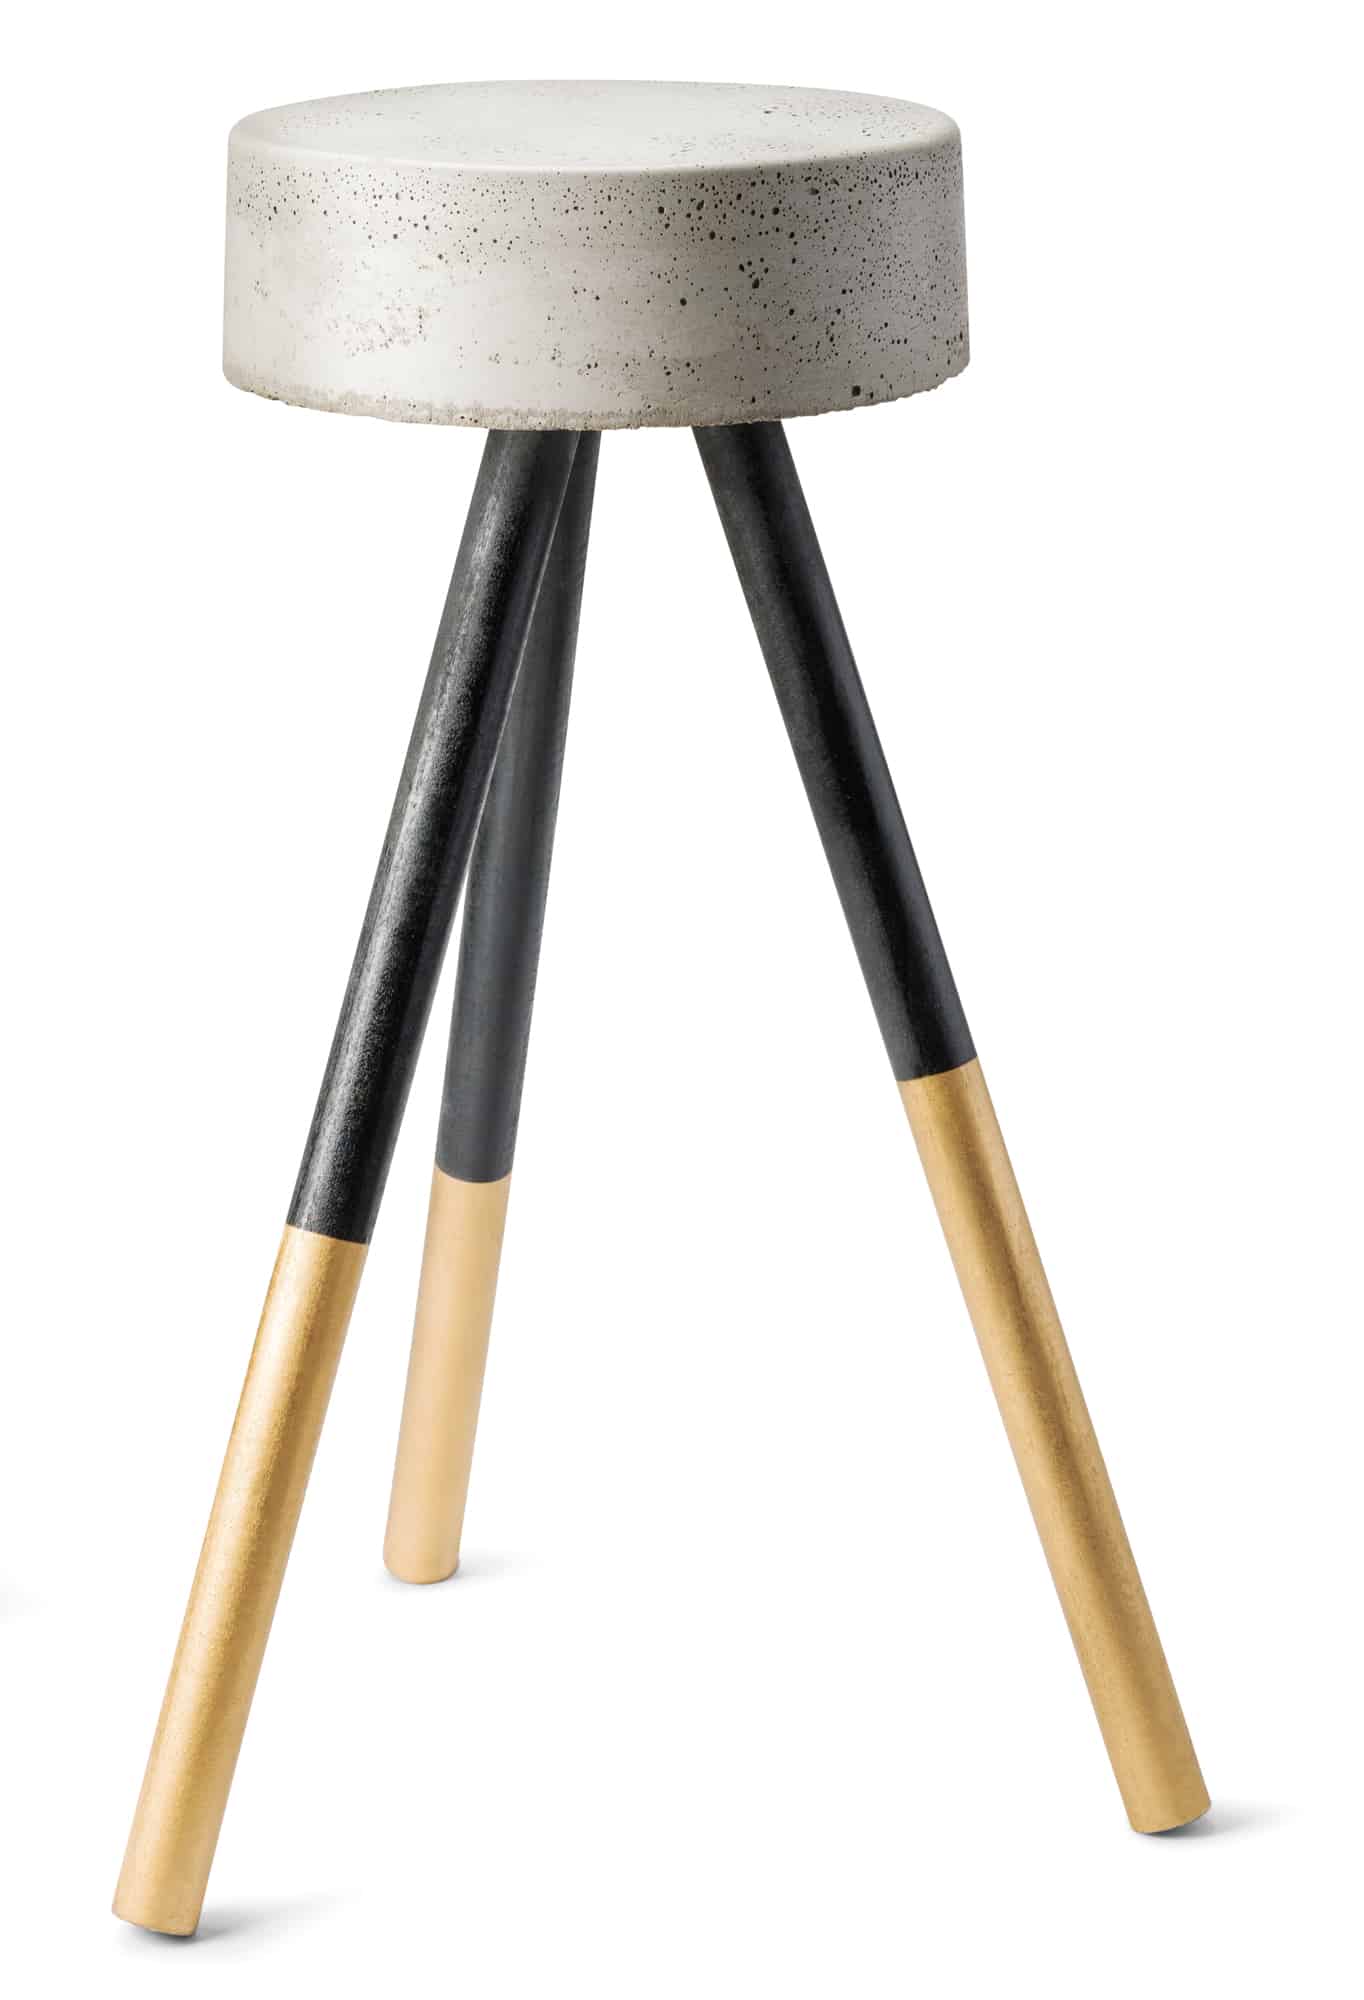 Concrete stool $75 by Allie Croza